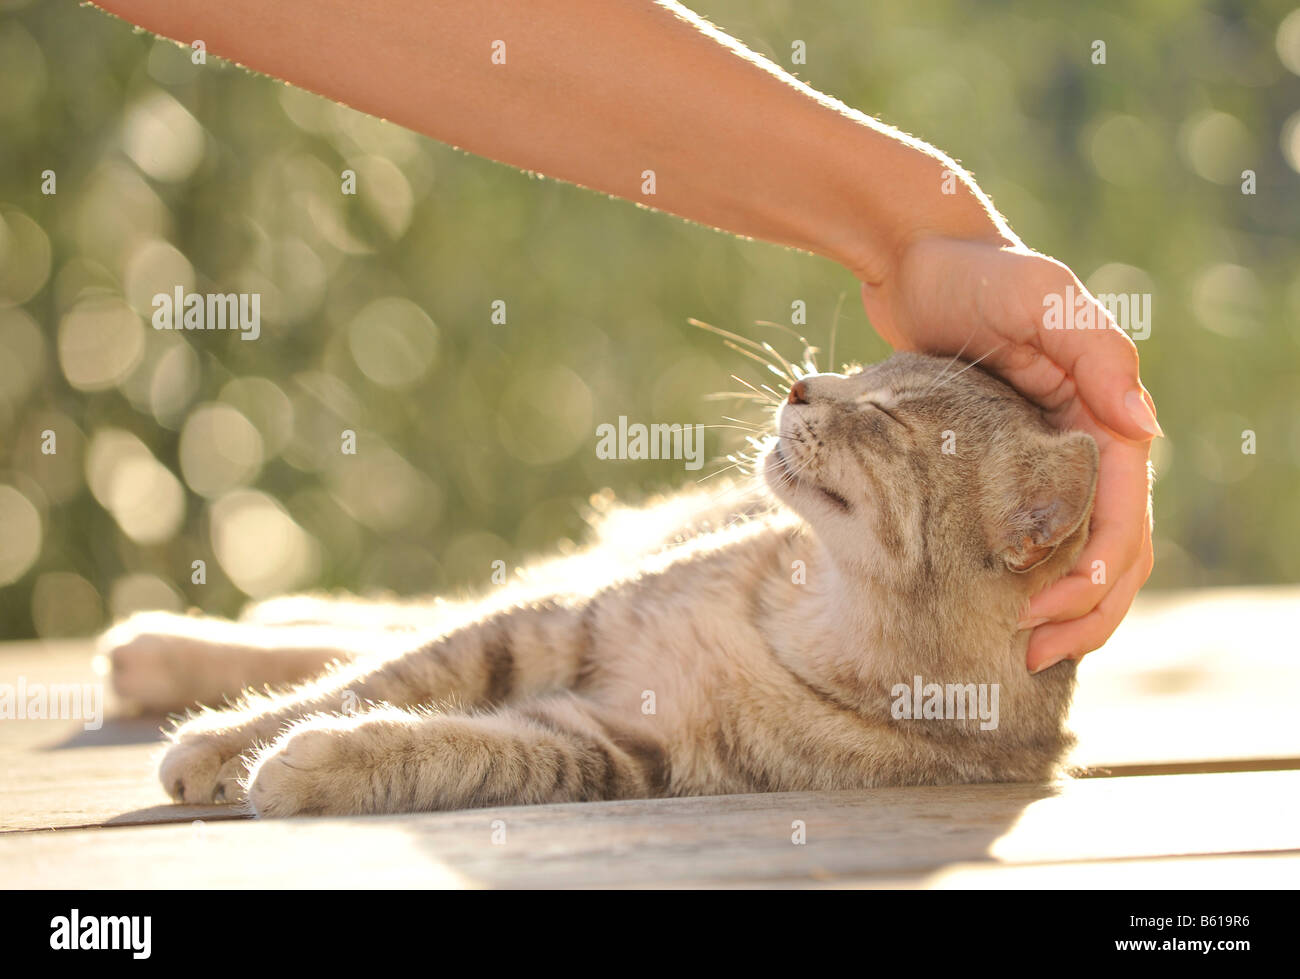 Hand stroking young gray tabby cat, cat enjoying it Stock Photo